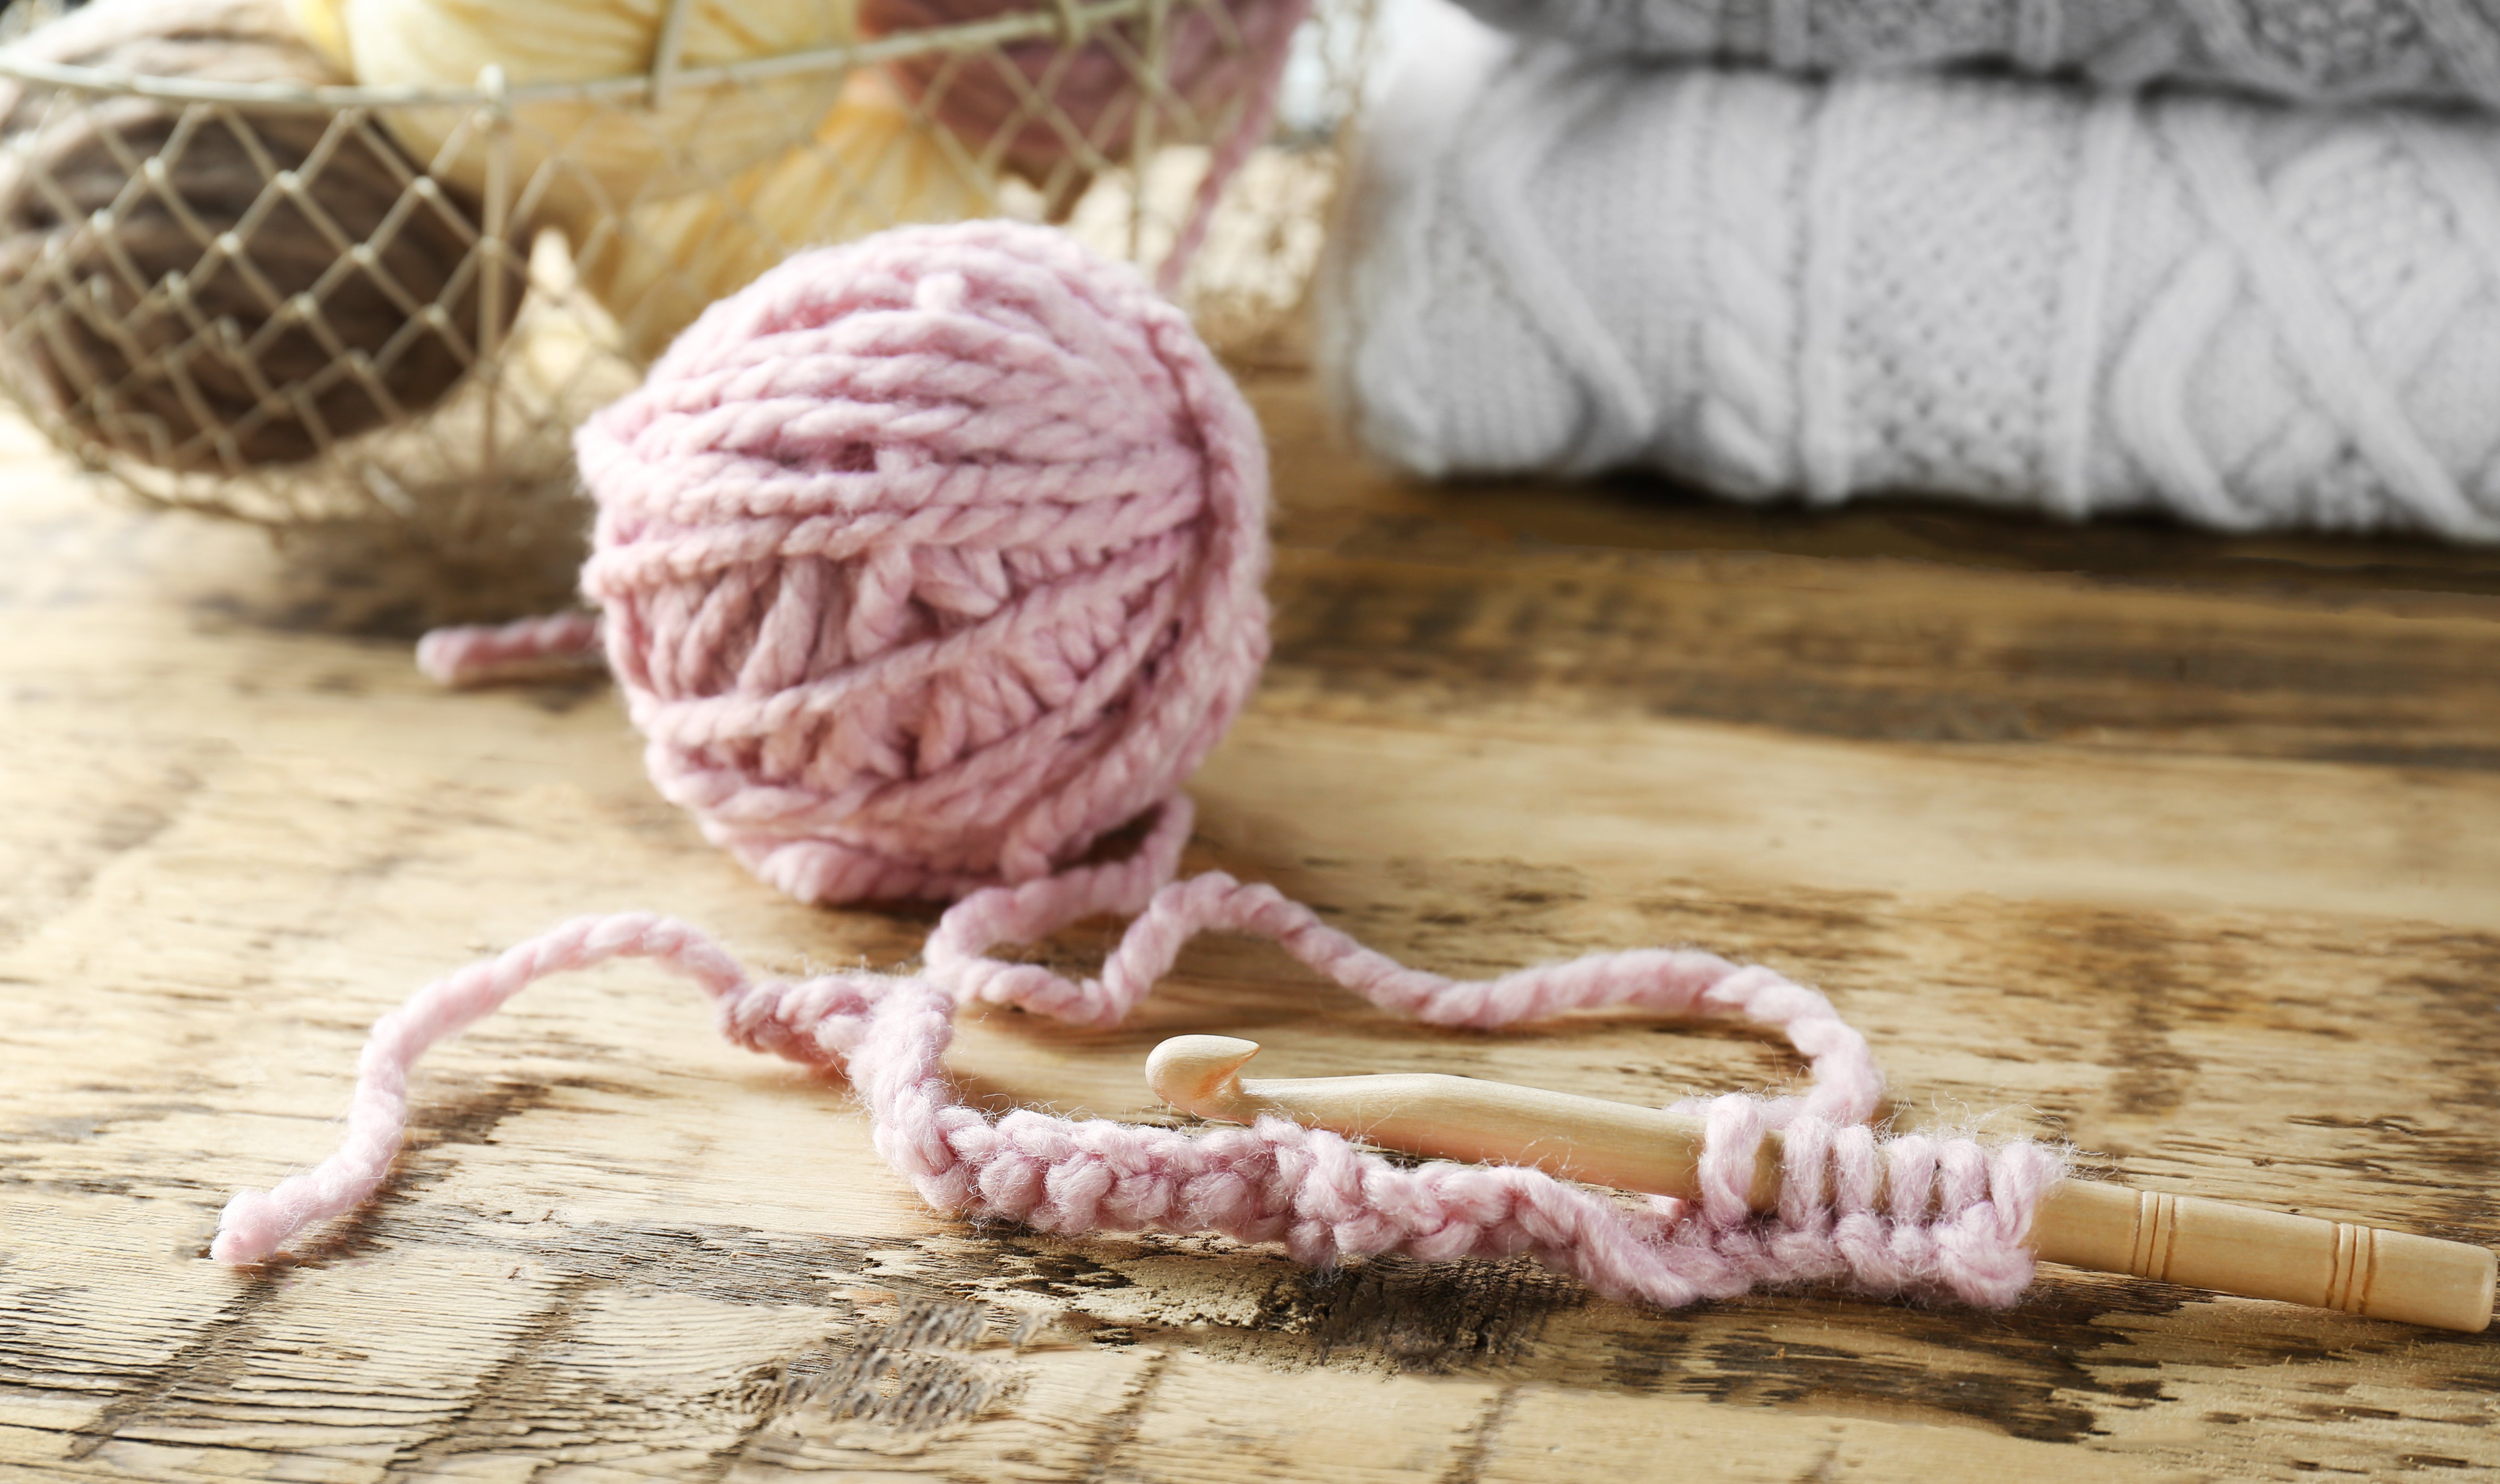 Implementos para tejer. | Foto: Shutterstock